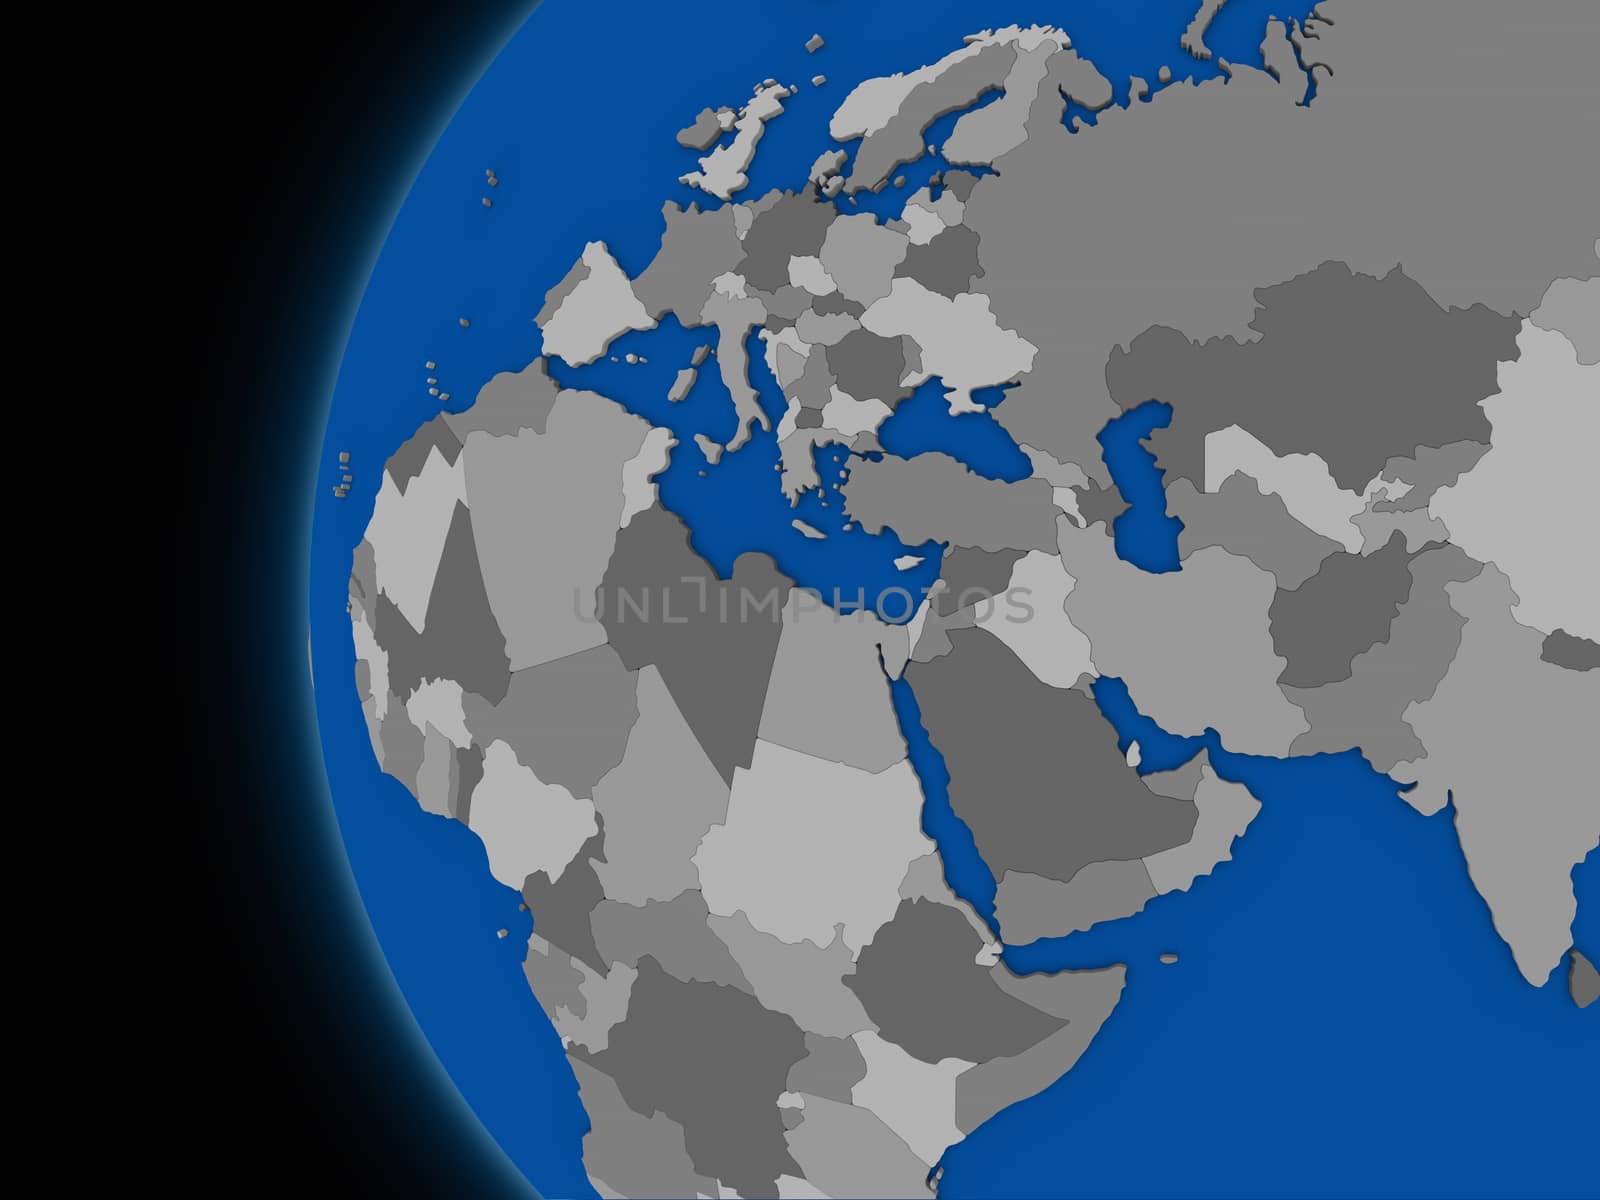 EMEA region on political Earth by Harvepino